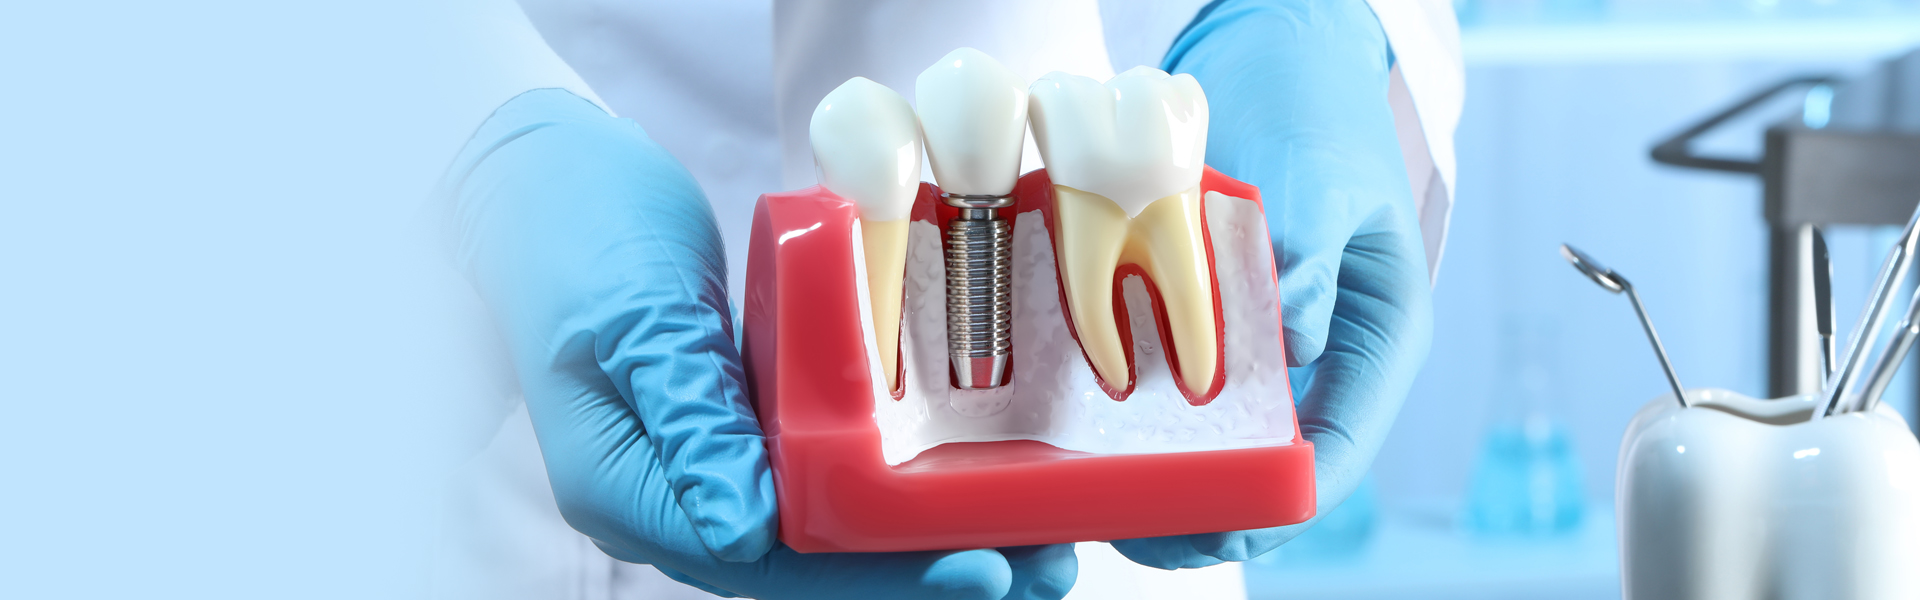 Dental Implants v/s Dentures: What’s Right for You?